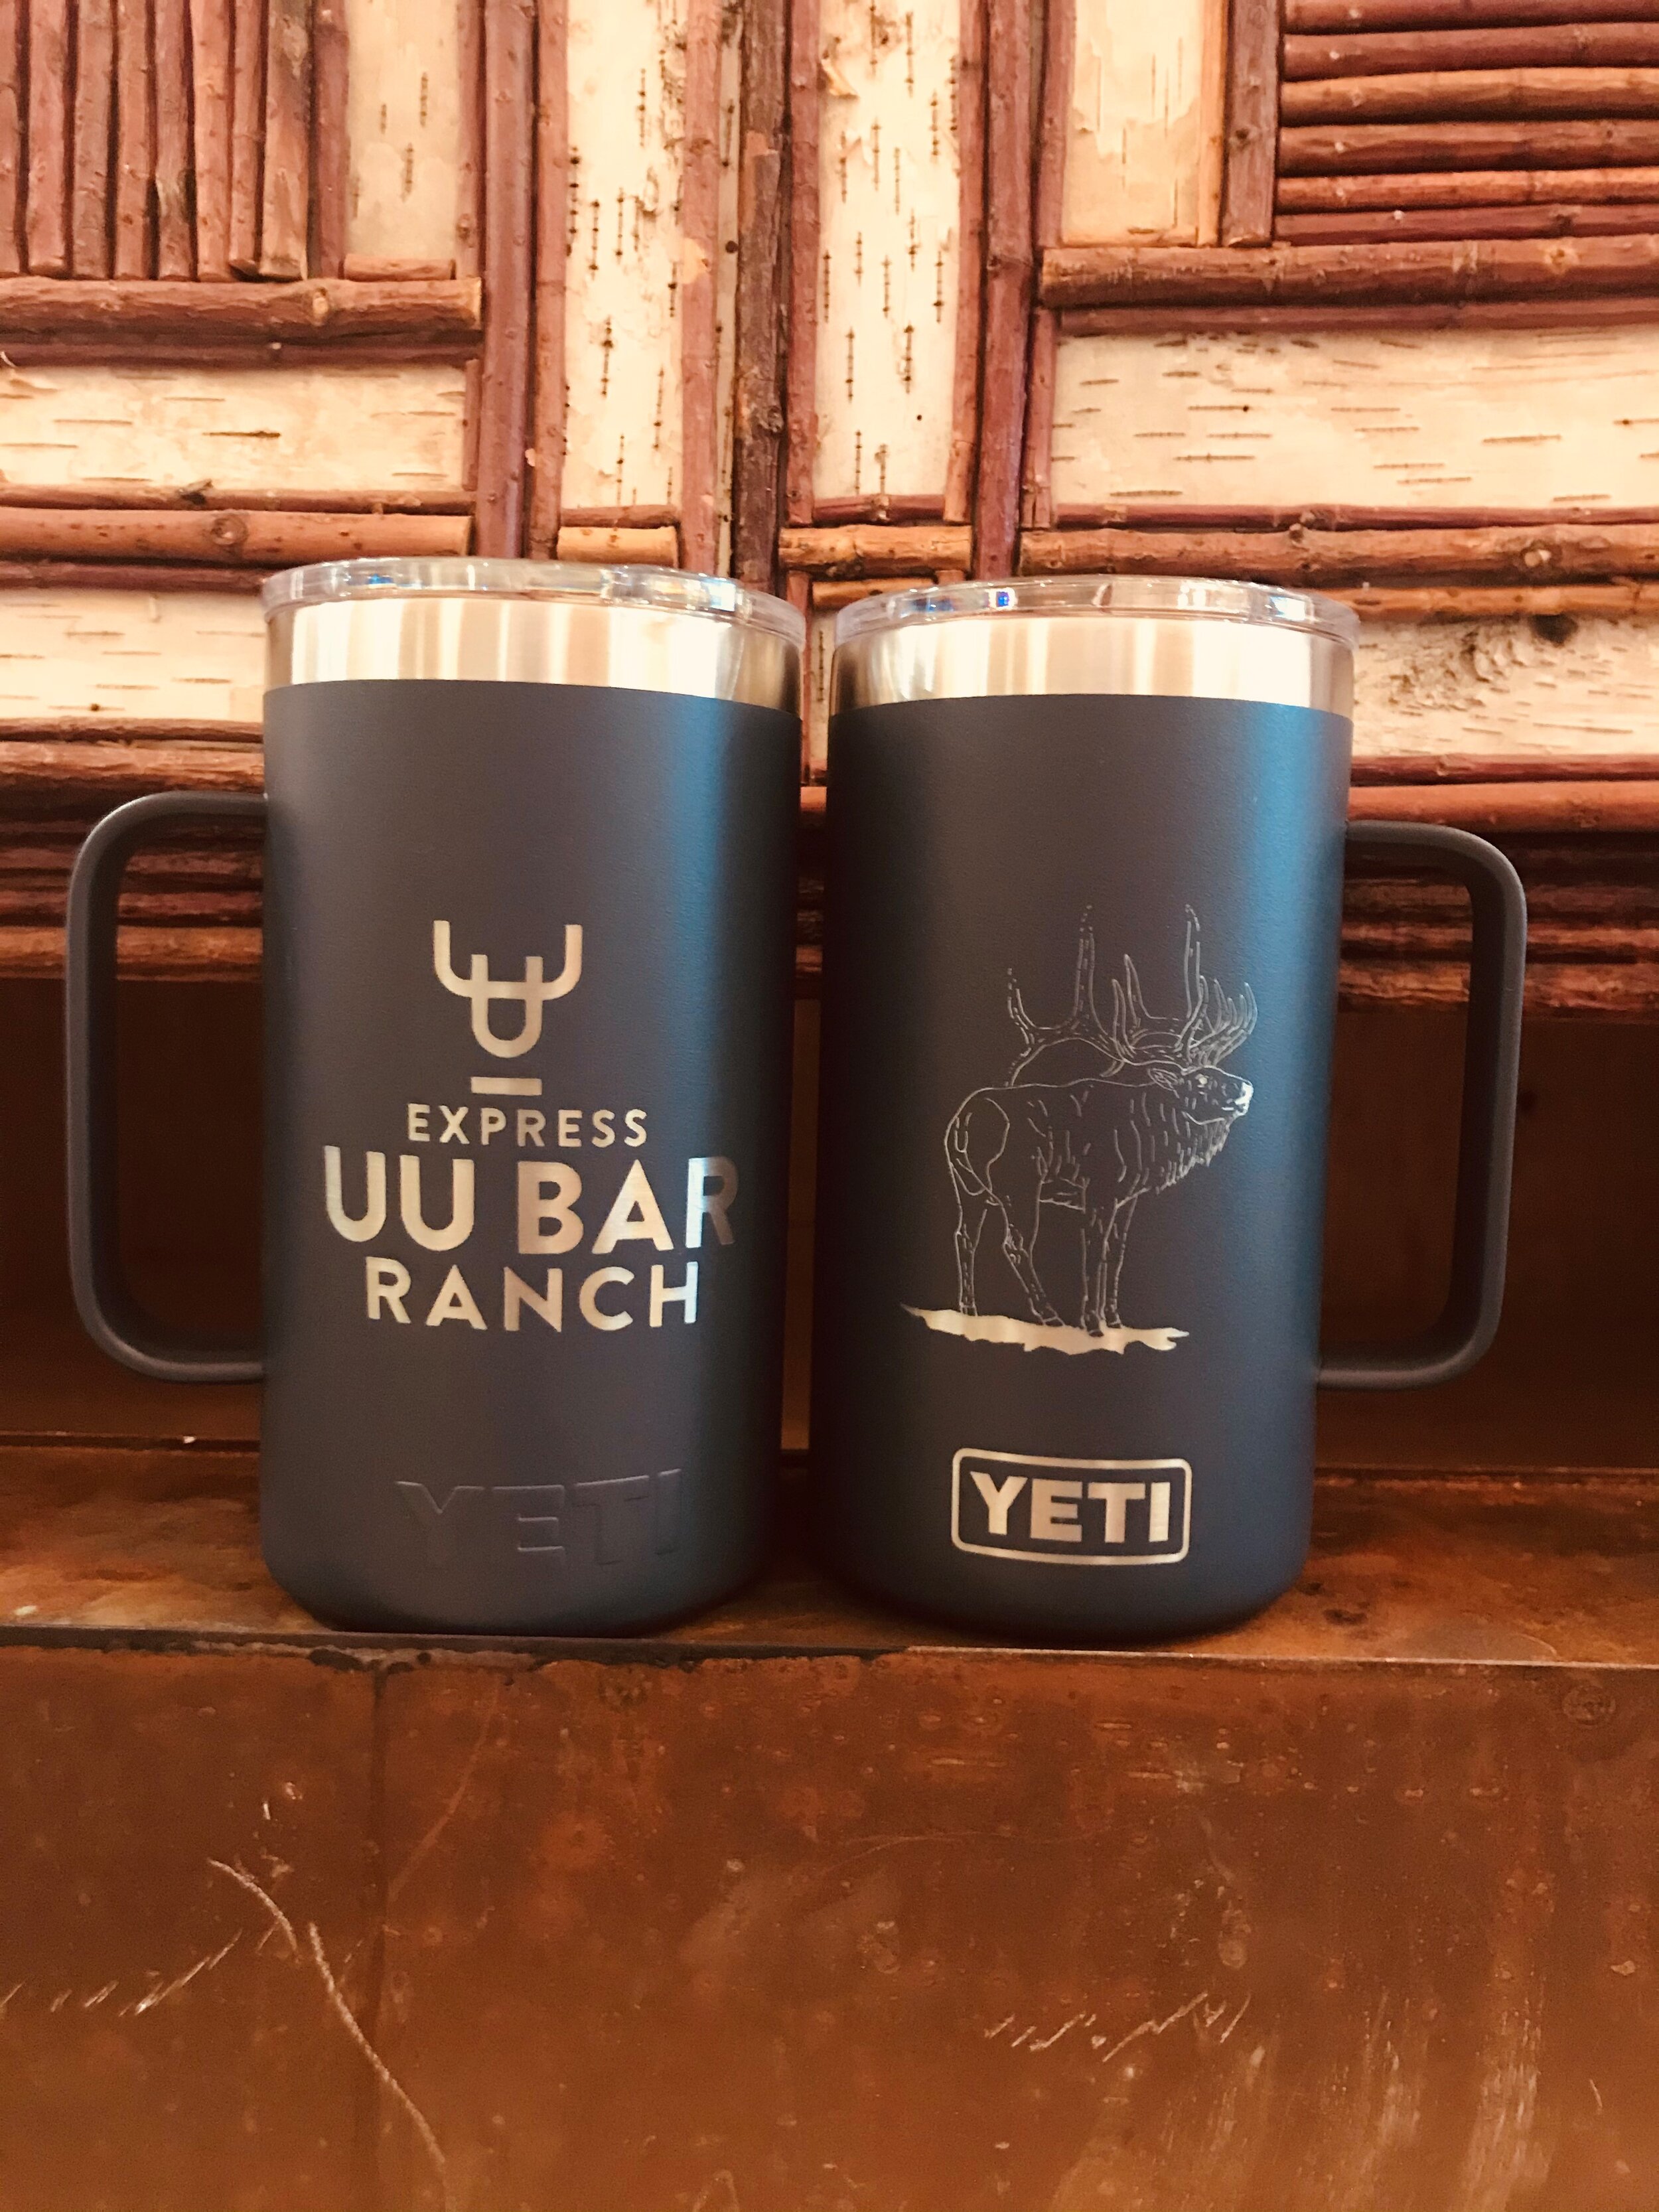 New Yeti 24 oz. Rambler Mug comparison with regular mug 